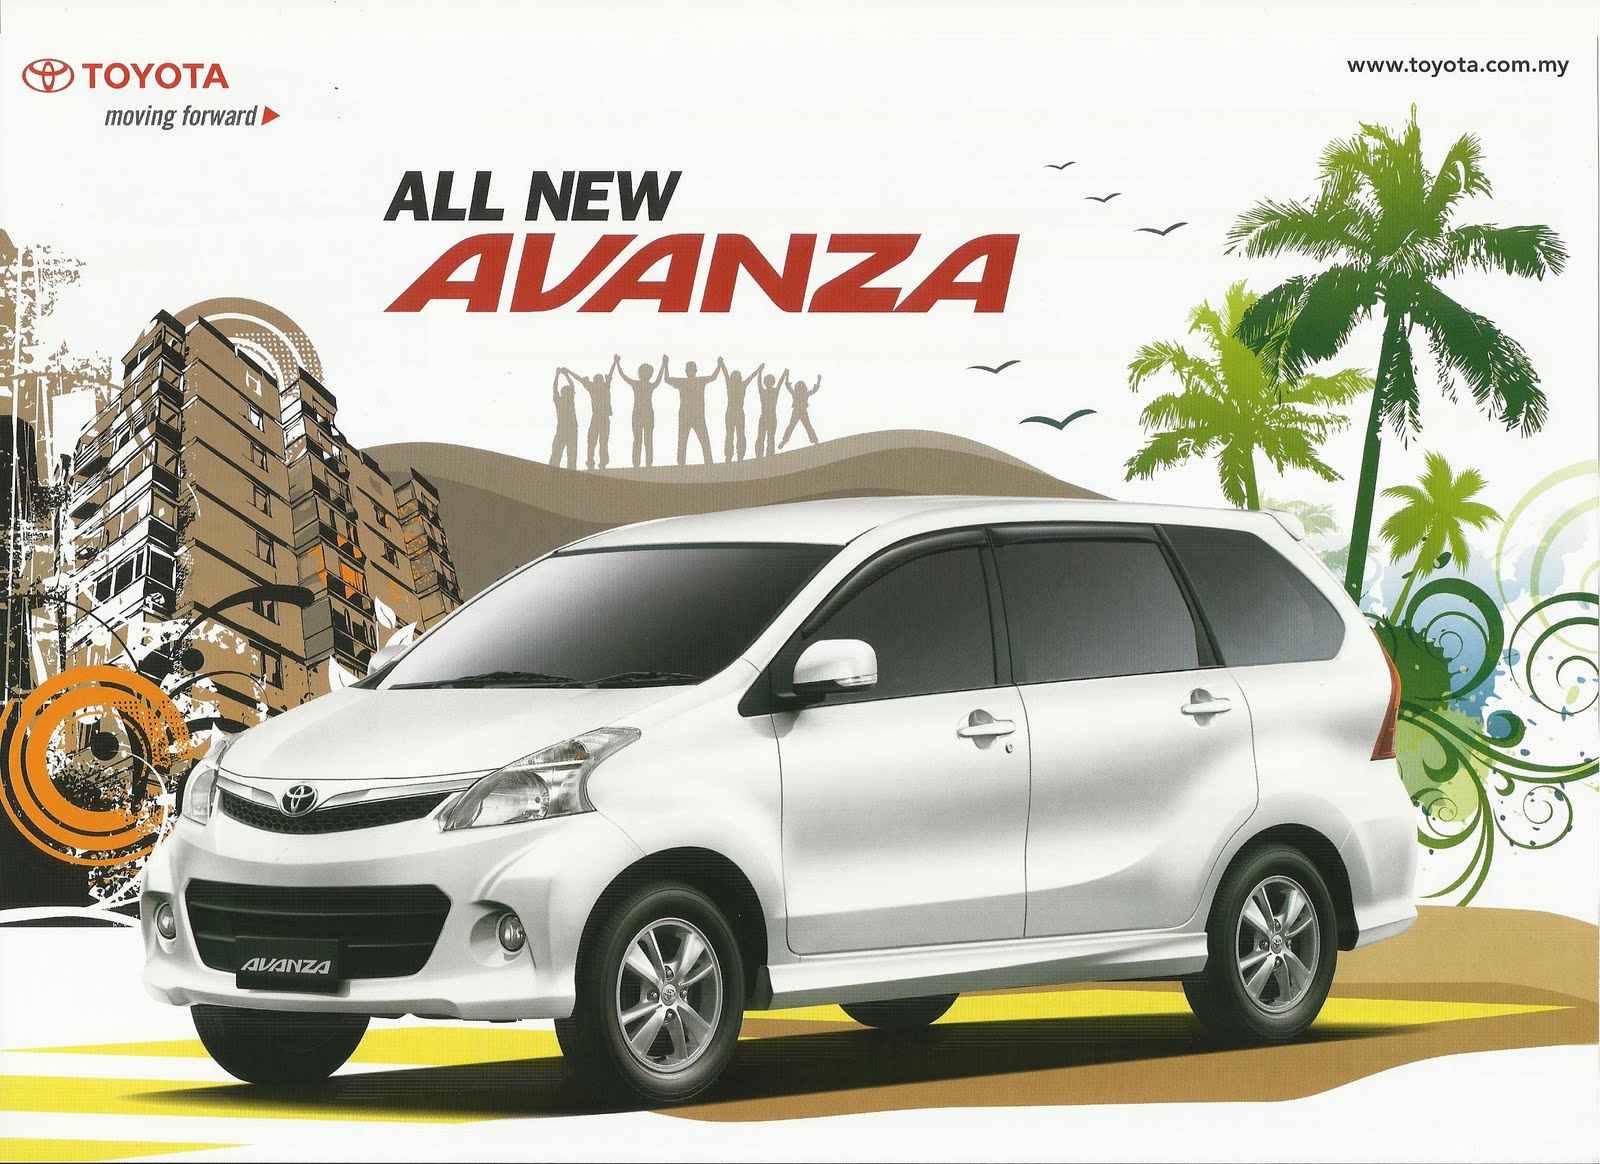 Toyota Avanza Philippines